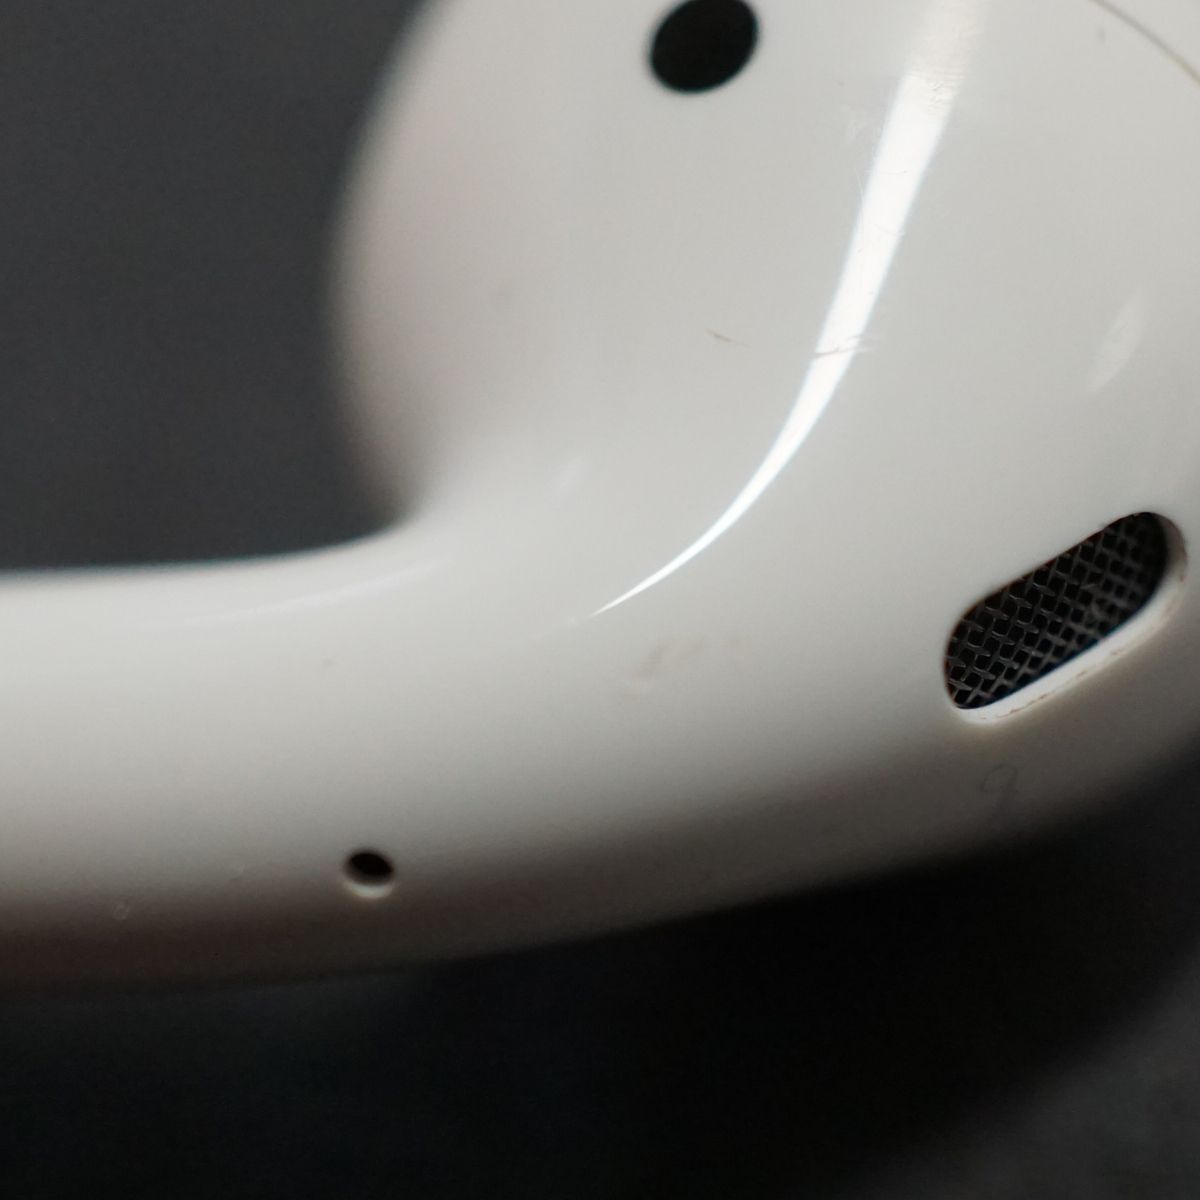 Apple AirPods エアーポッズ USED品 左イヤホンのみ L 片耳 A2031 第二世代 正規品 MV7N2J/A 完動品 中古 T V9169_画像4